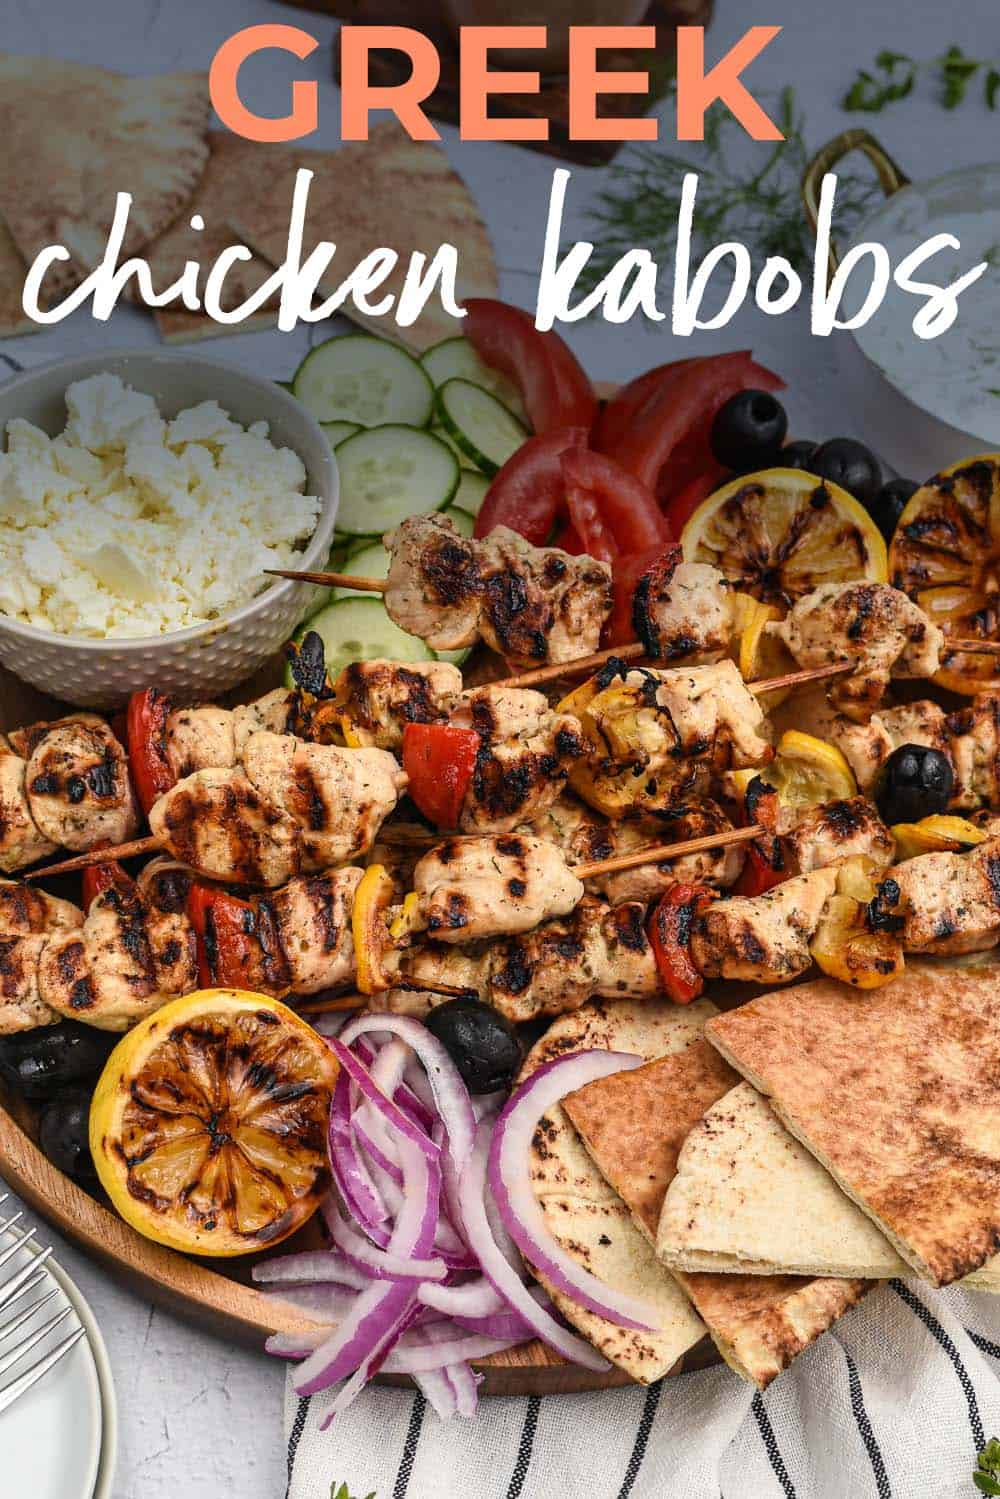 Greek chicken kabob platter with text for Pinterest.